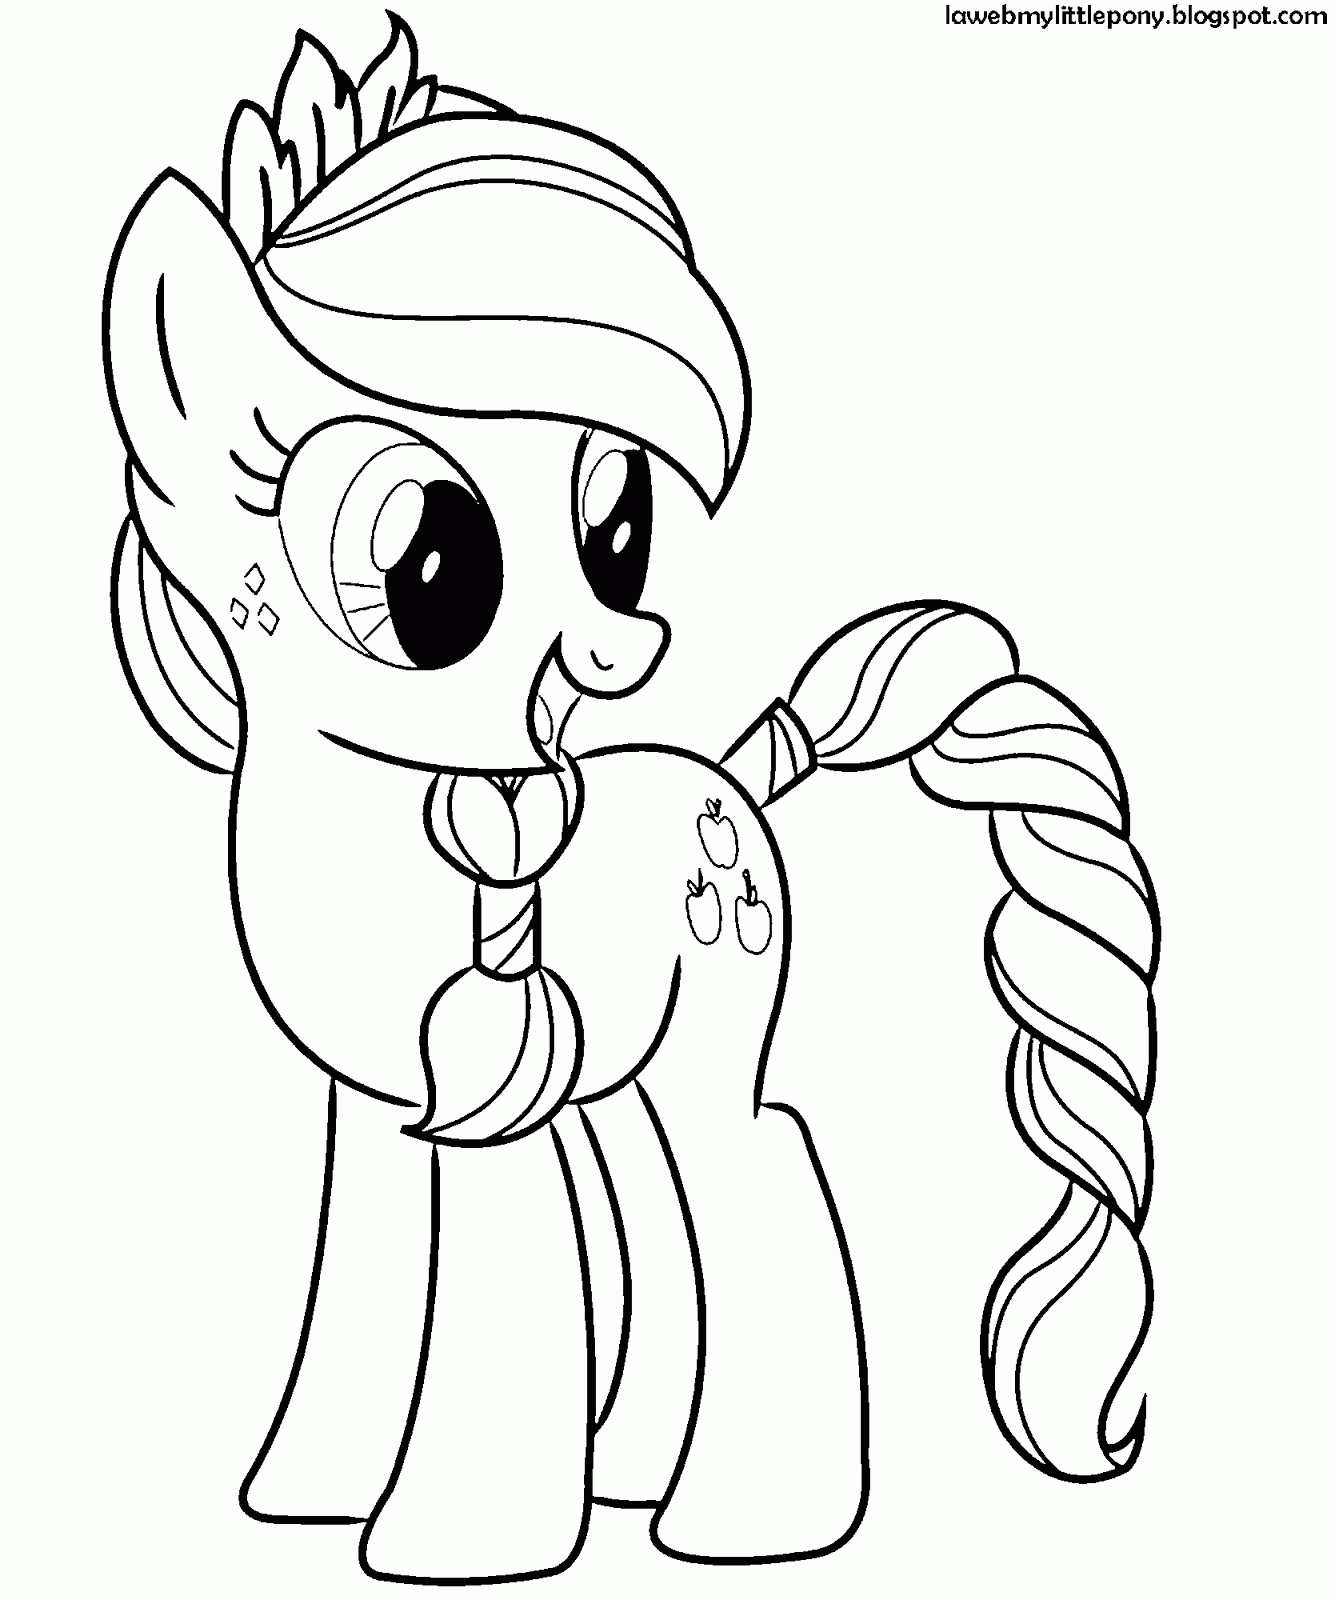 My Little Pony: Dibujos para colorear de Applejack de My Little Pony